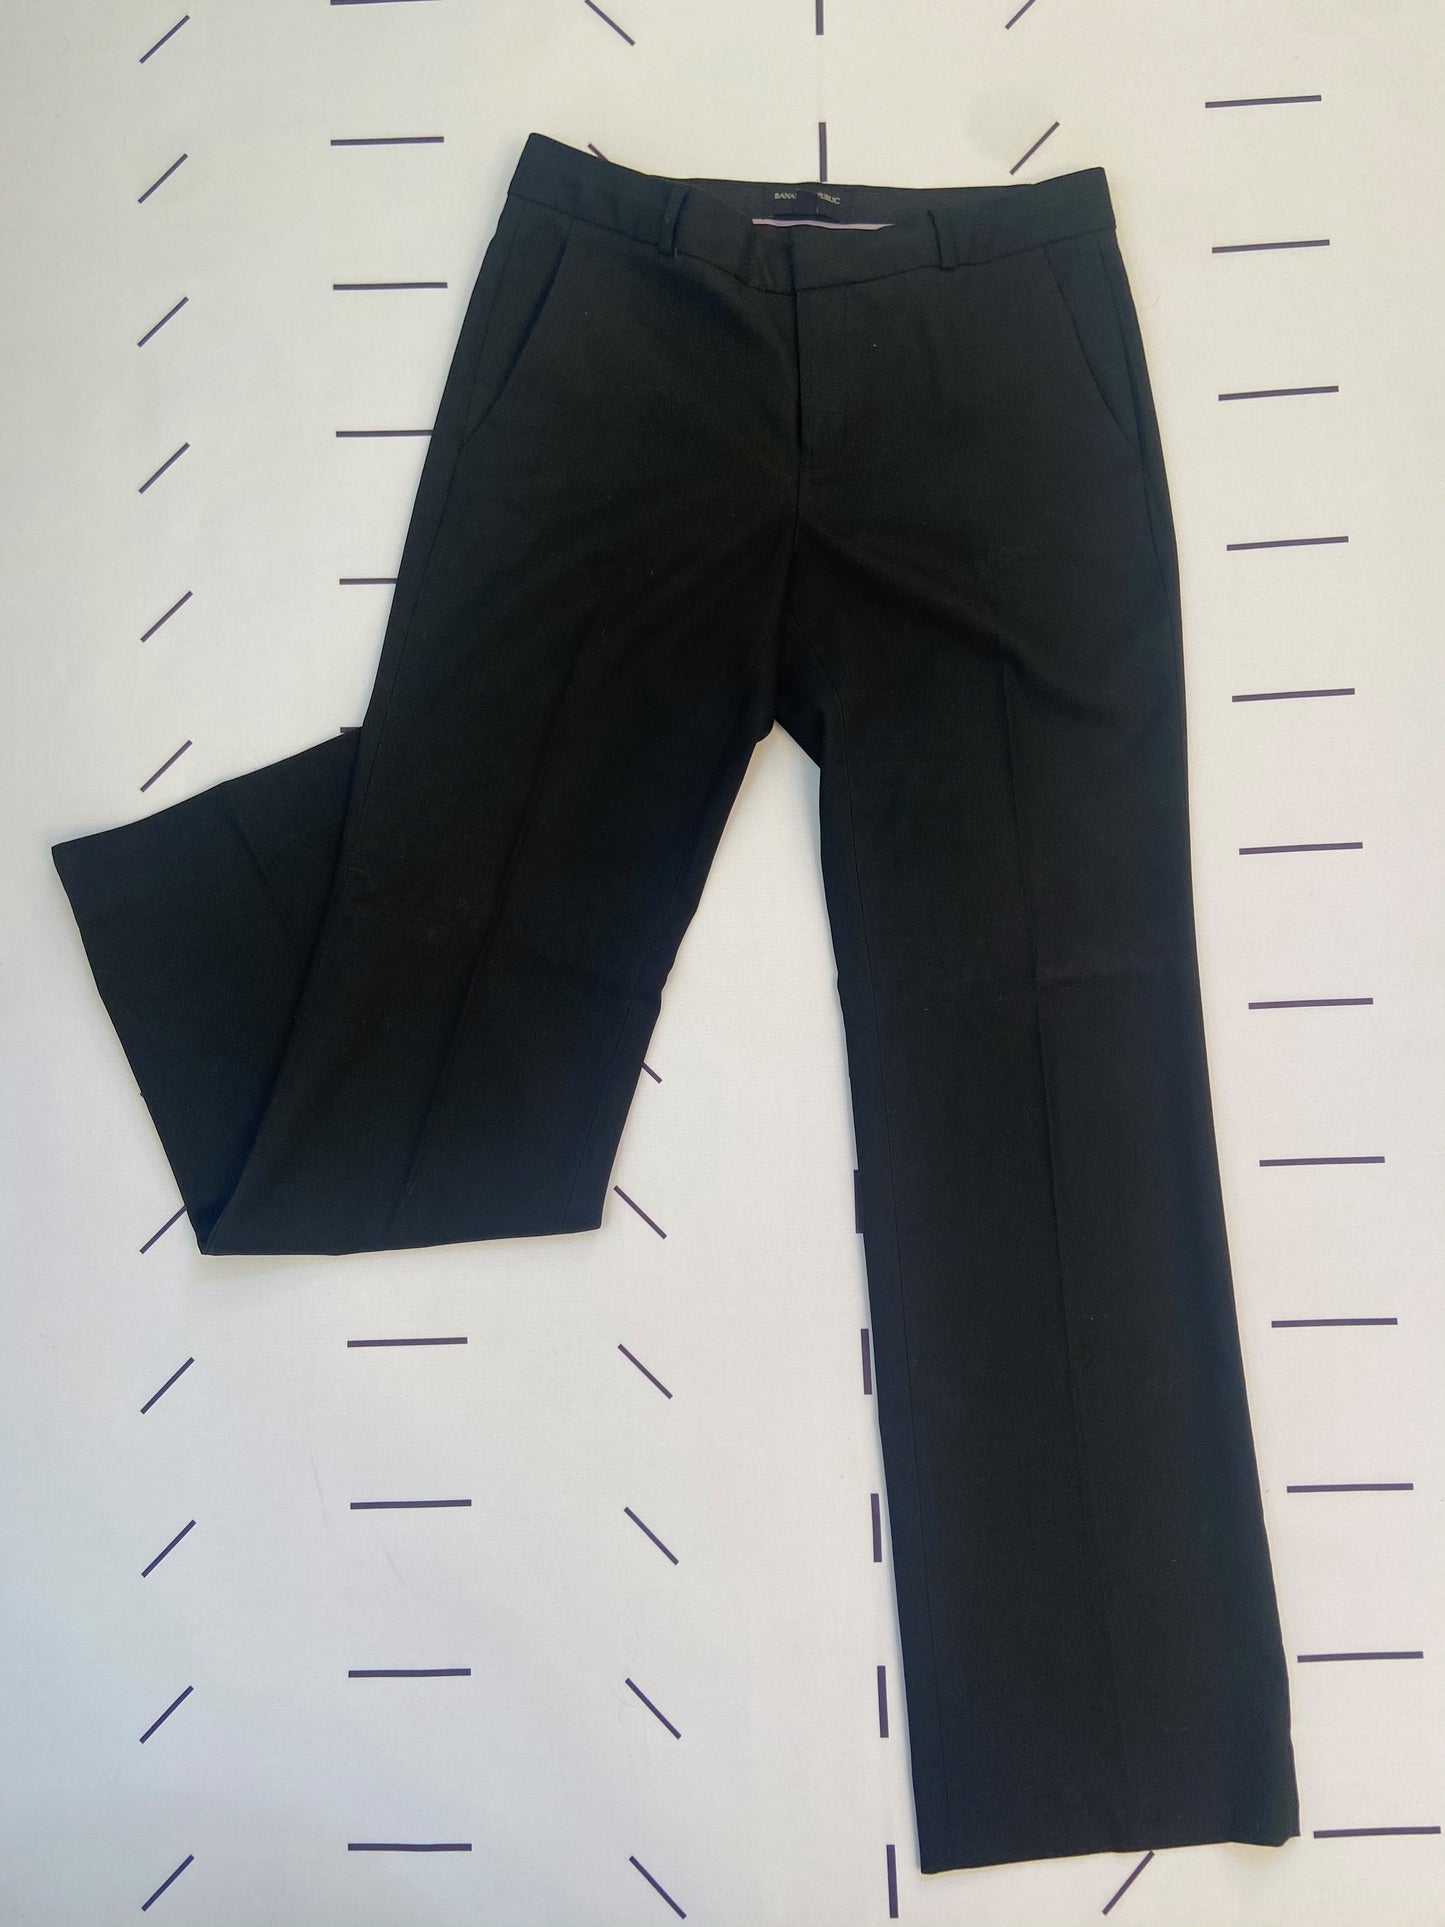 Black Boot Cut Dress Pants - S (6)